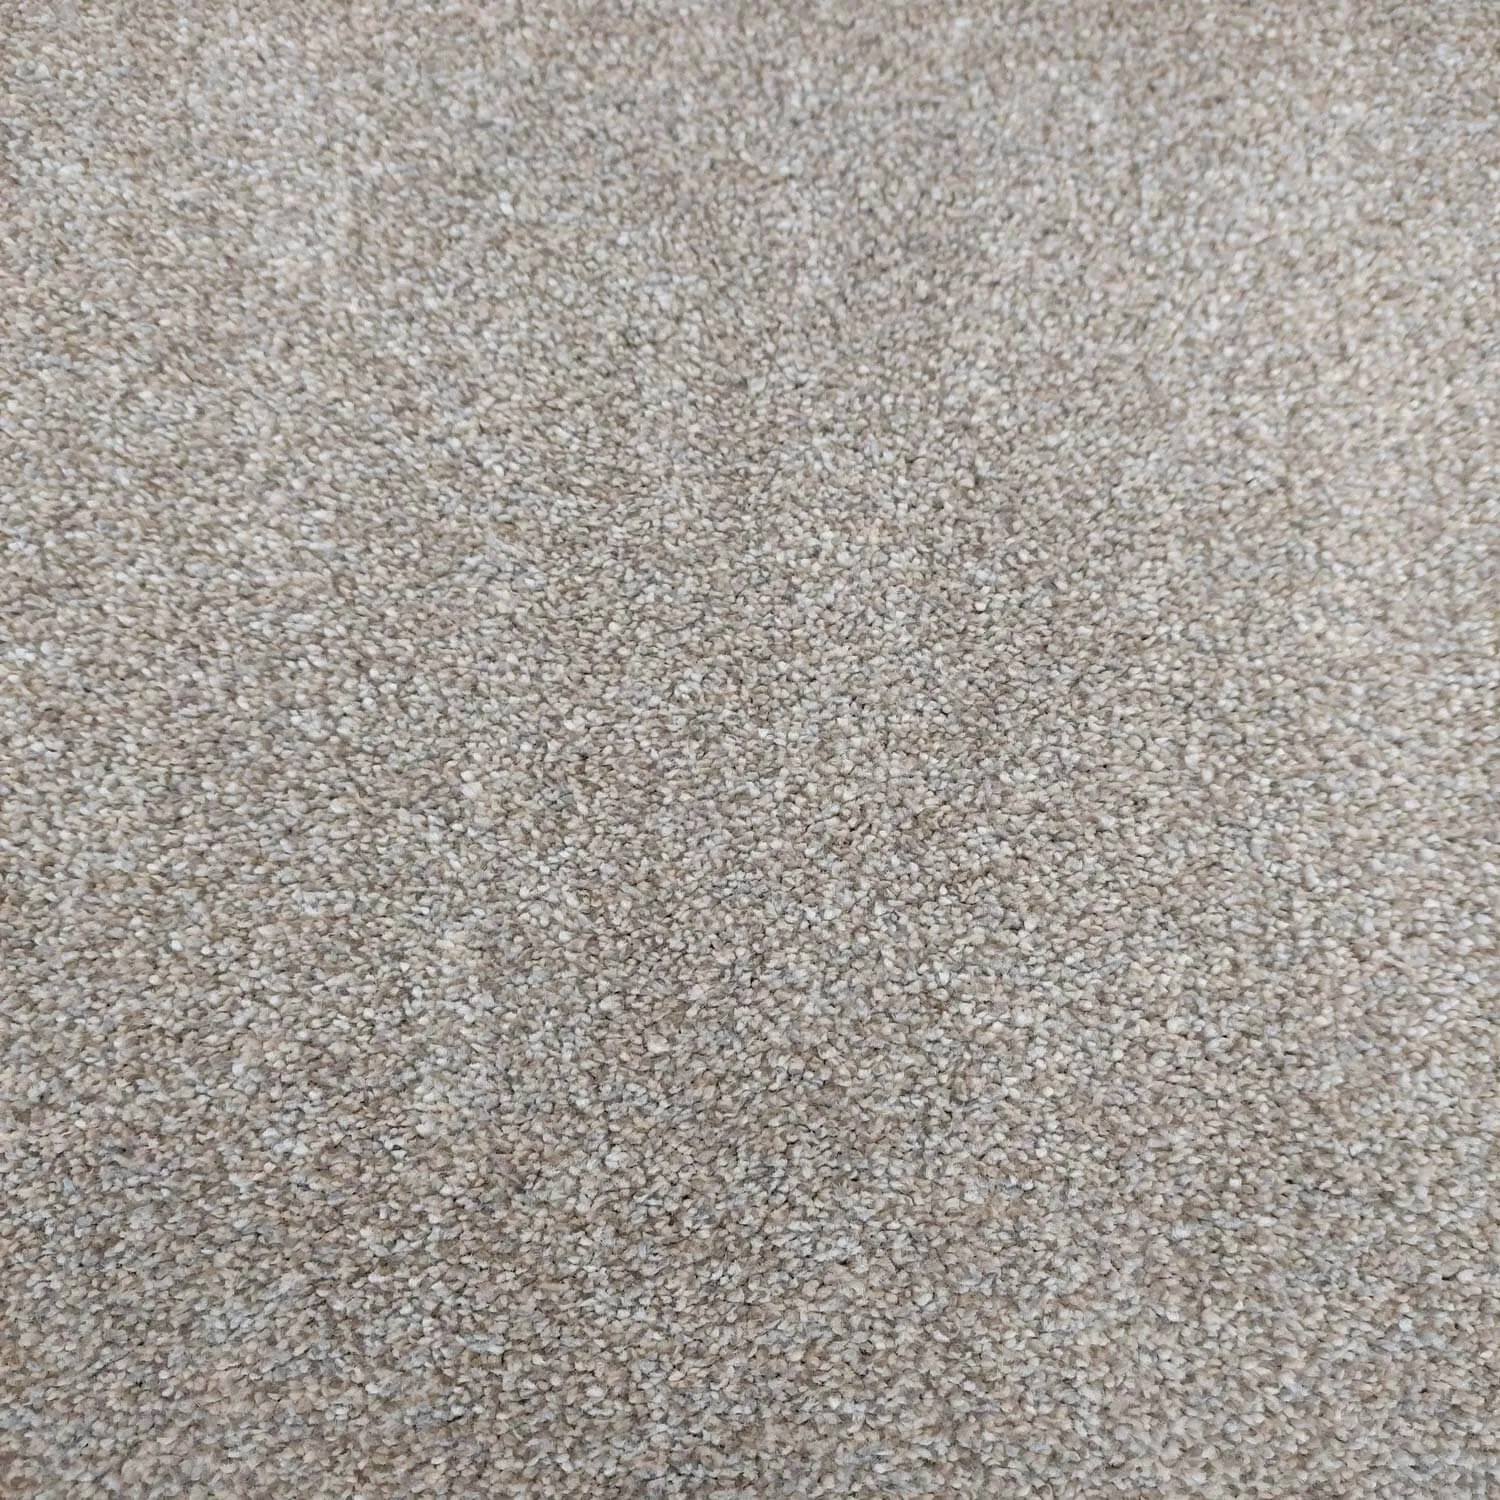 Caress Saxony Carpet - 674 French White